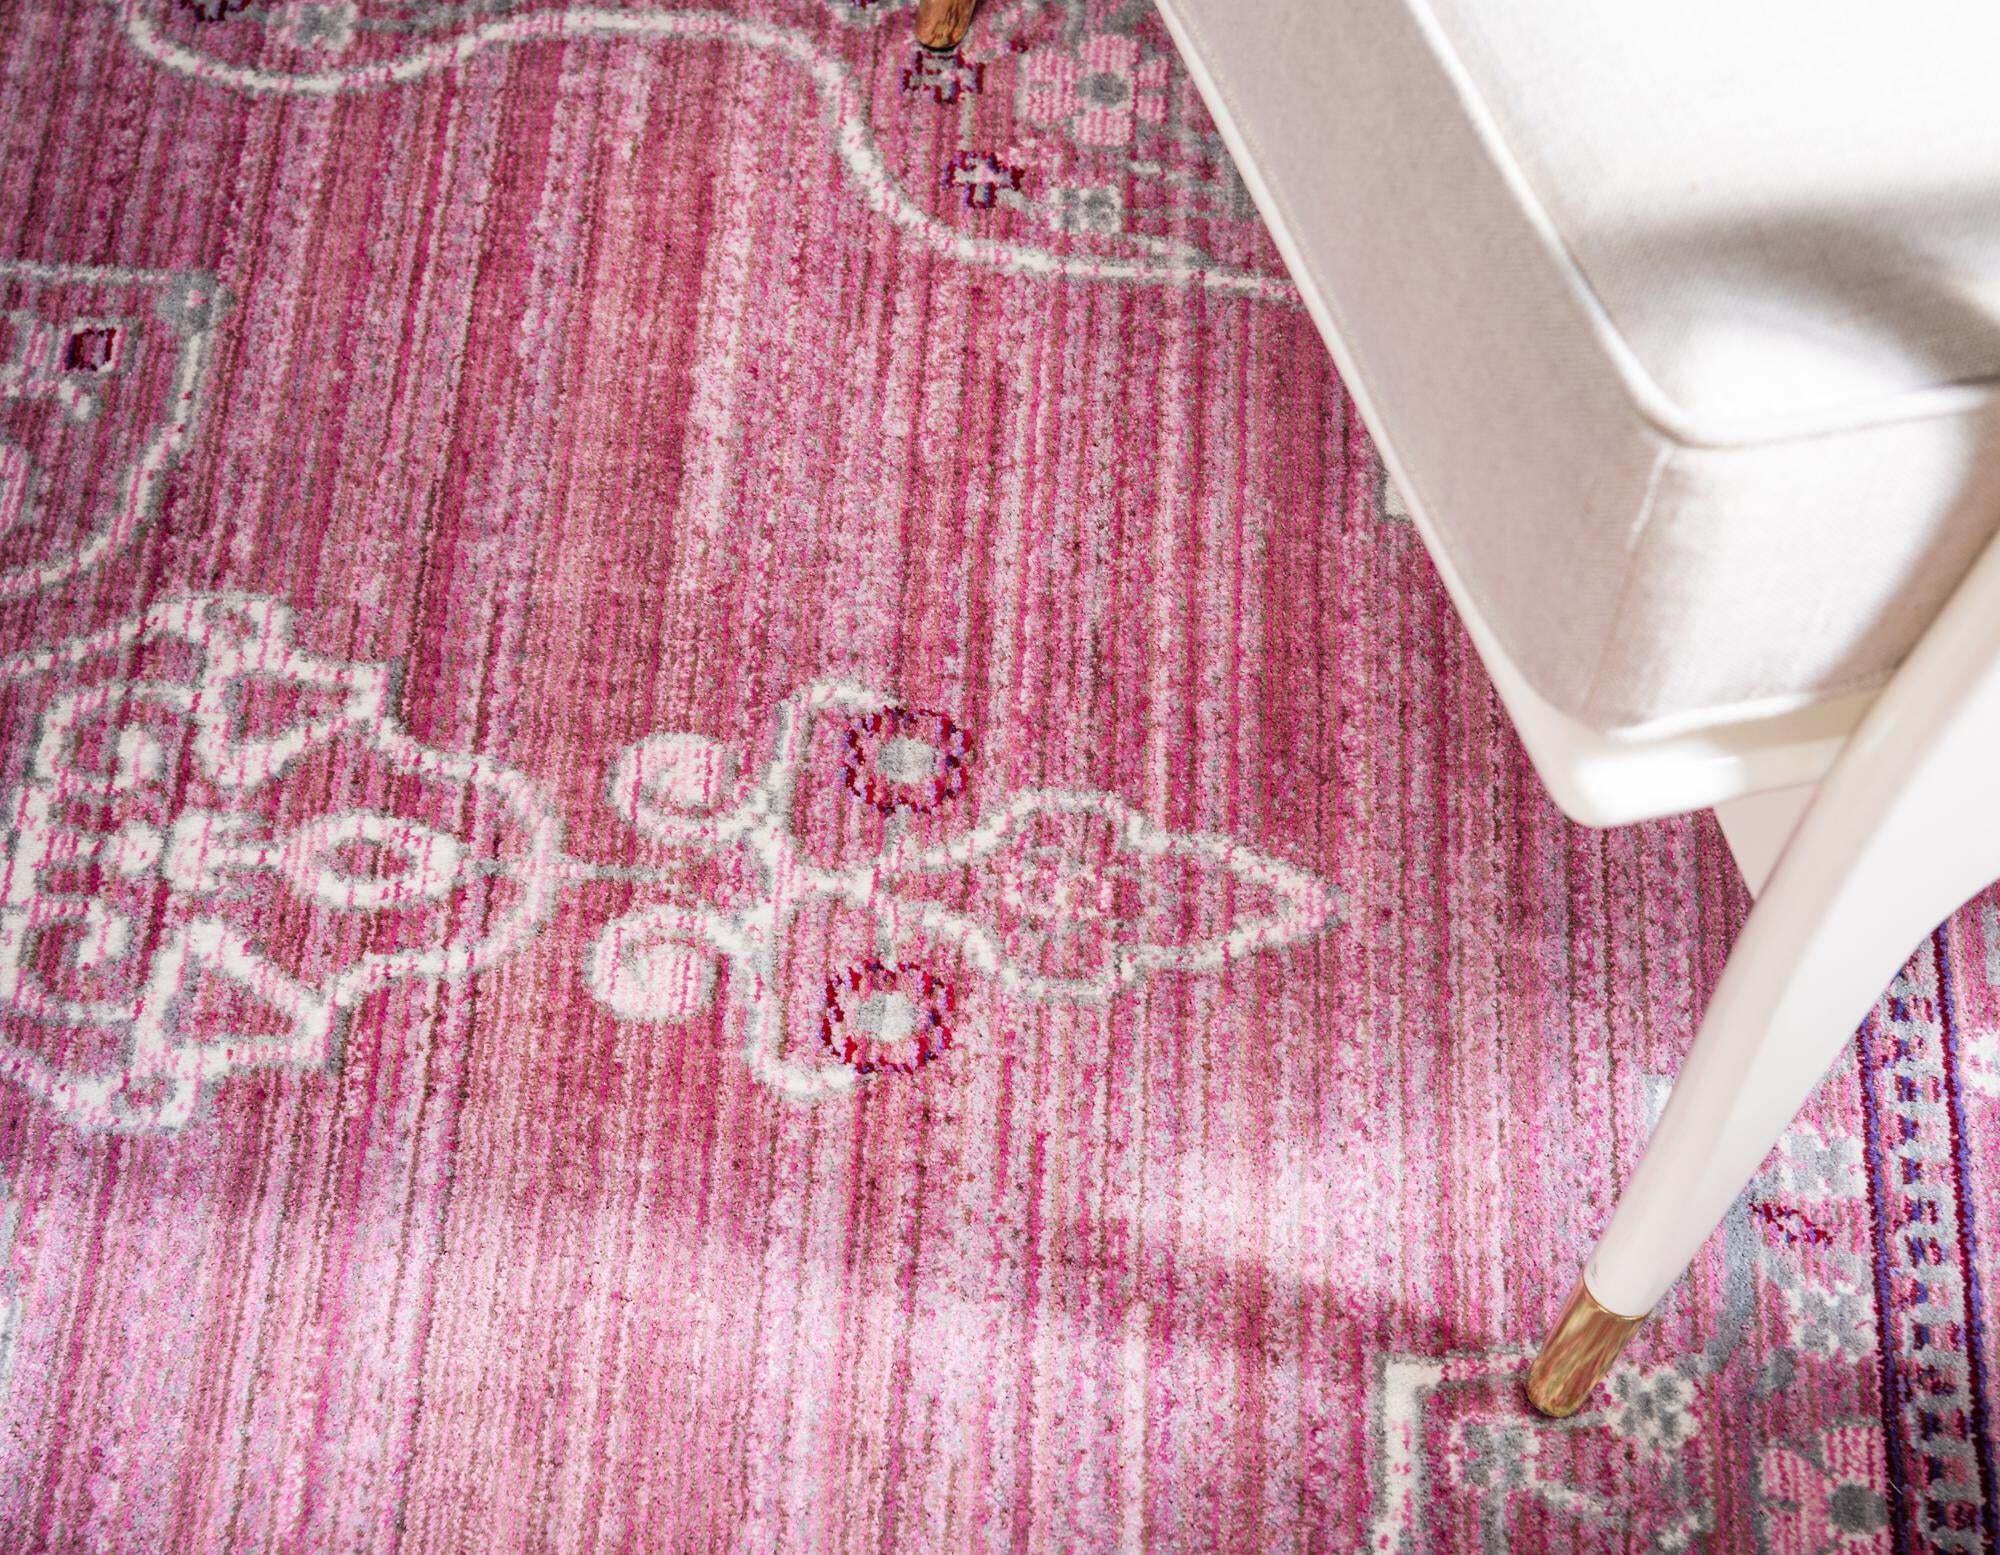 Unique Loom Indoor Rugs - Austin Floral 7x10 Rectangular Rug Pink & Beige